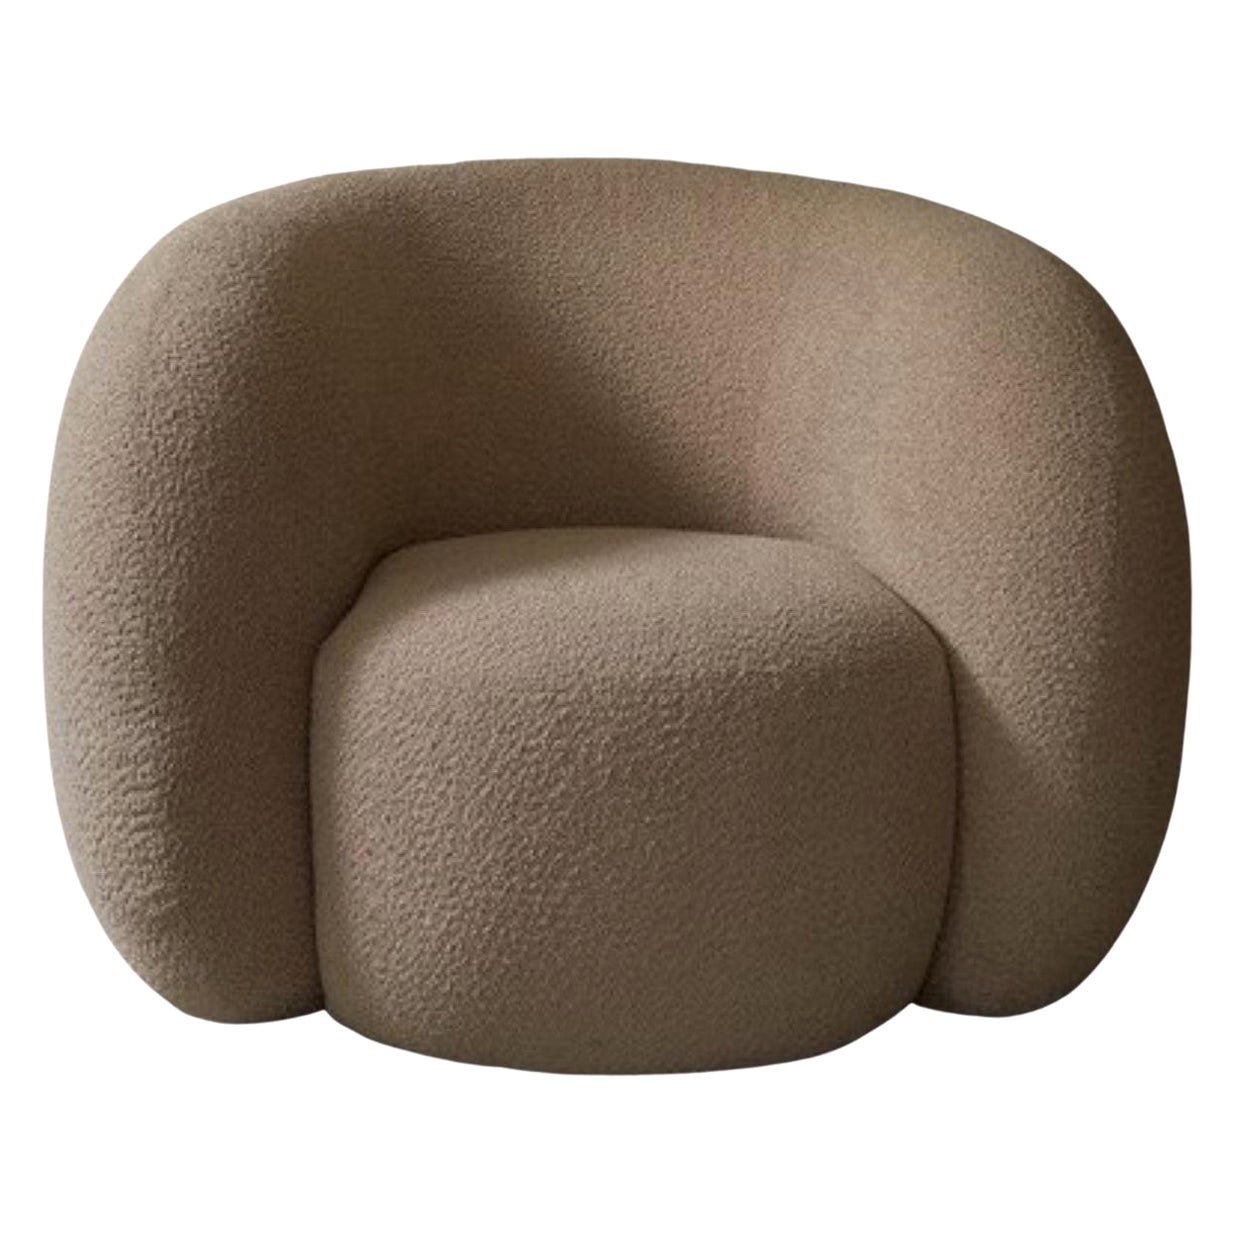 Circular Lounge Chair by Karstudio